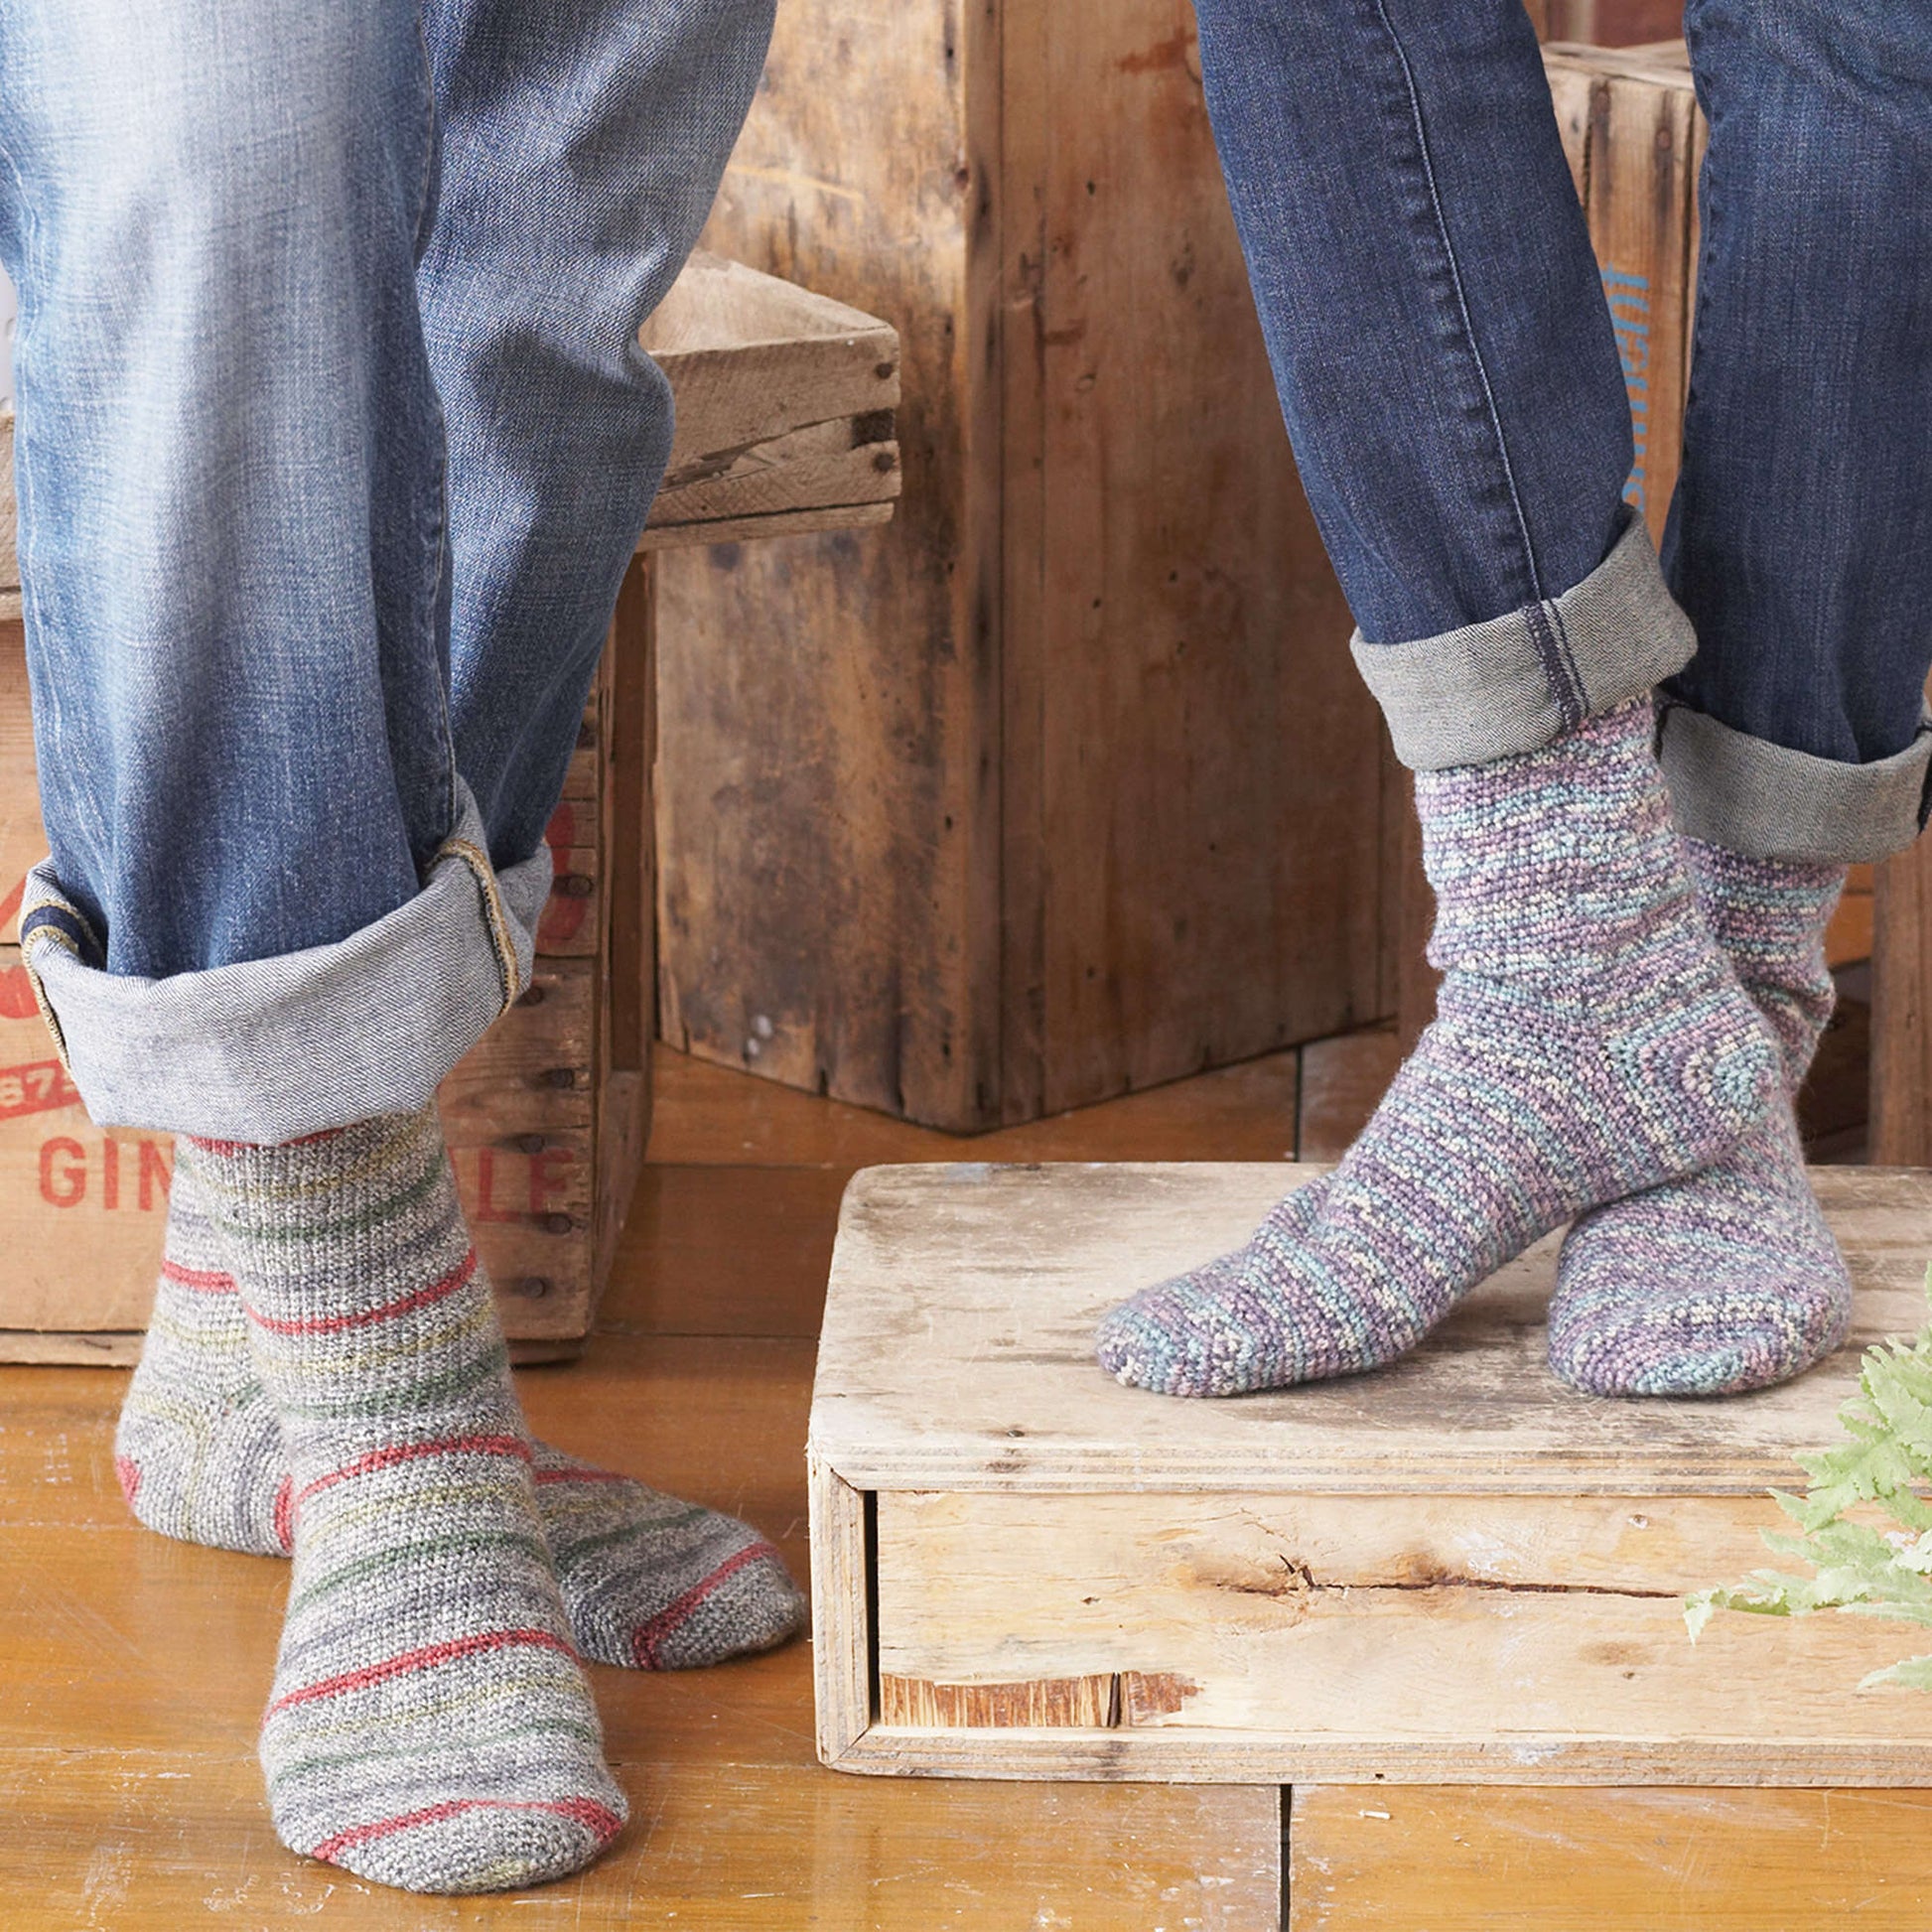 Free Patons Crochet Toe Up Socks Pattern